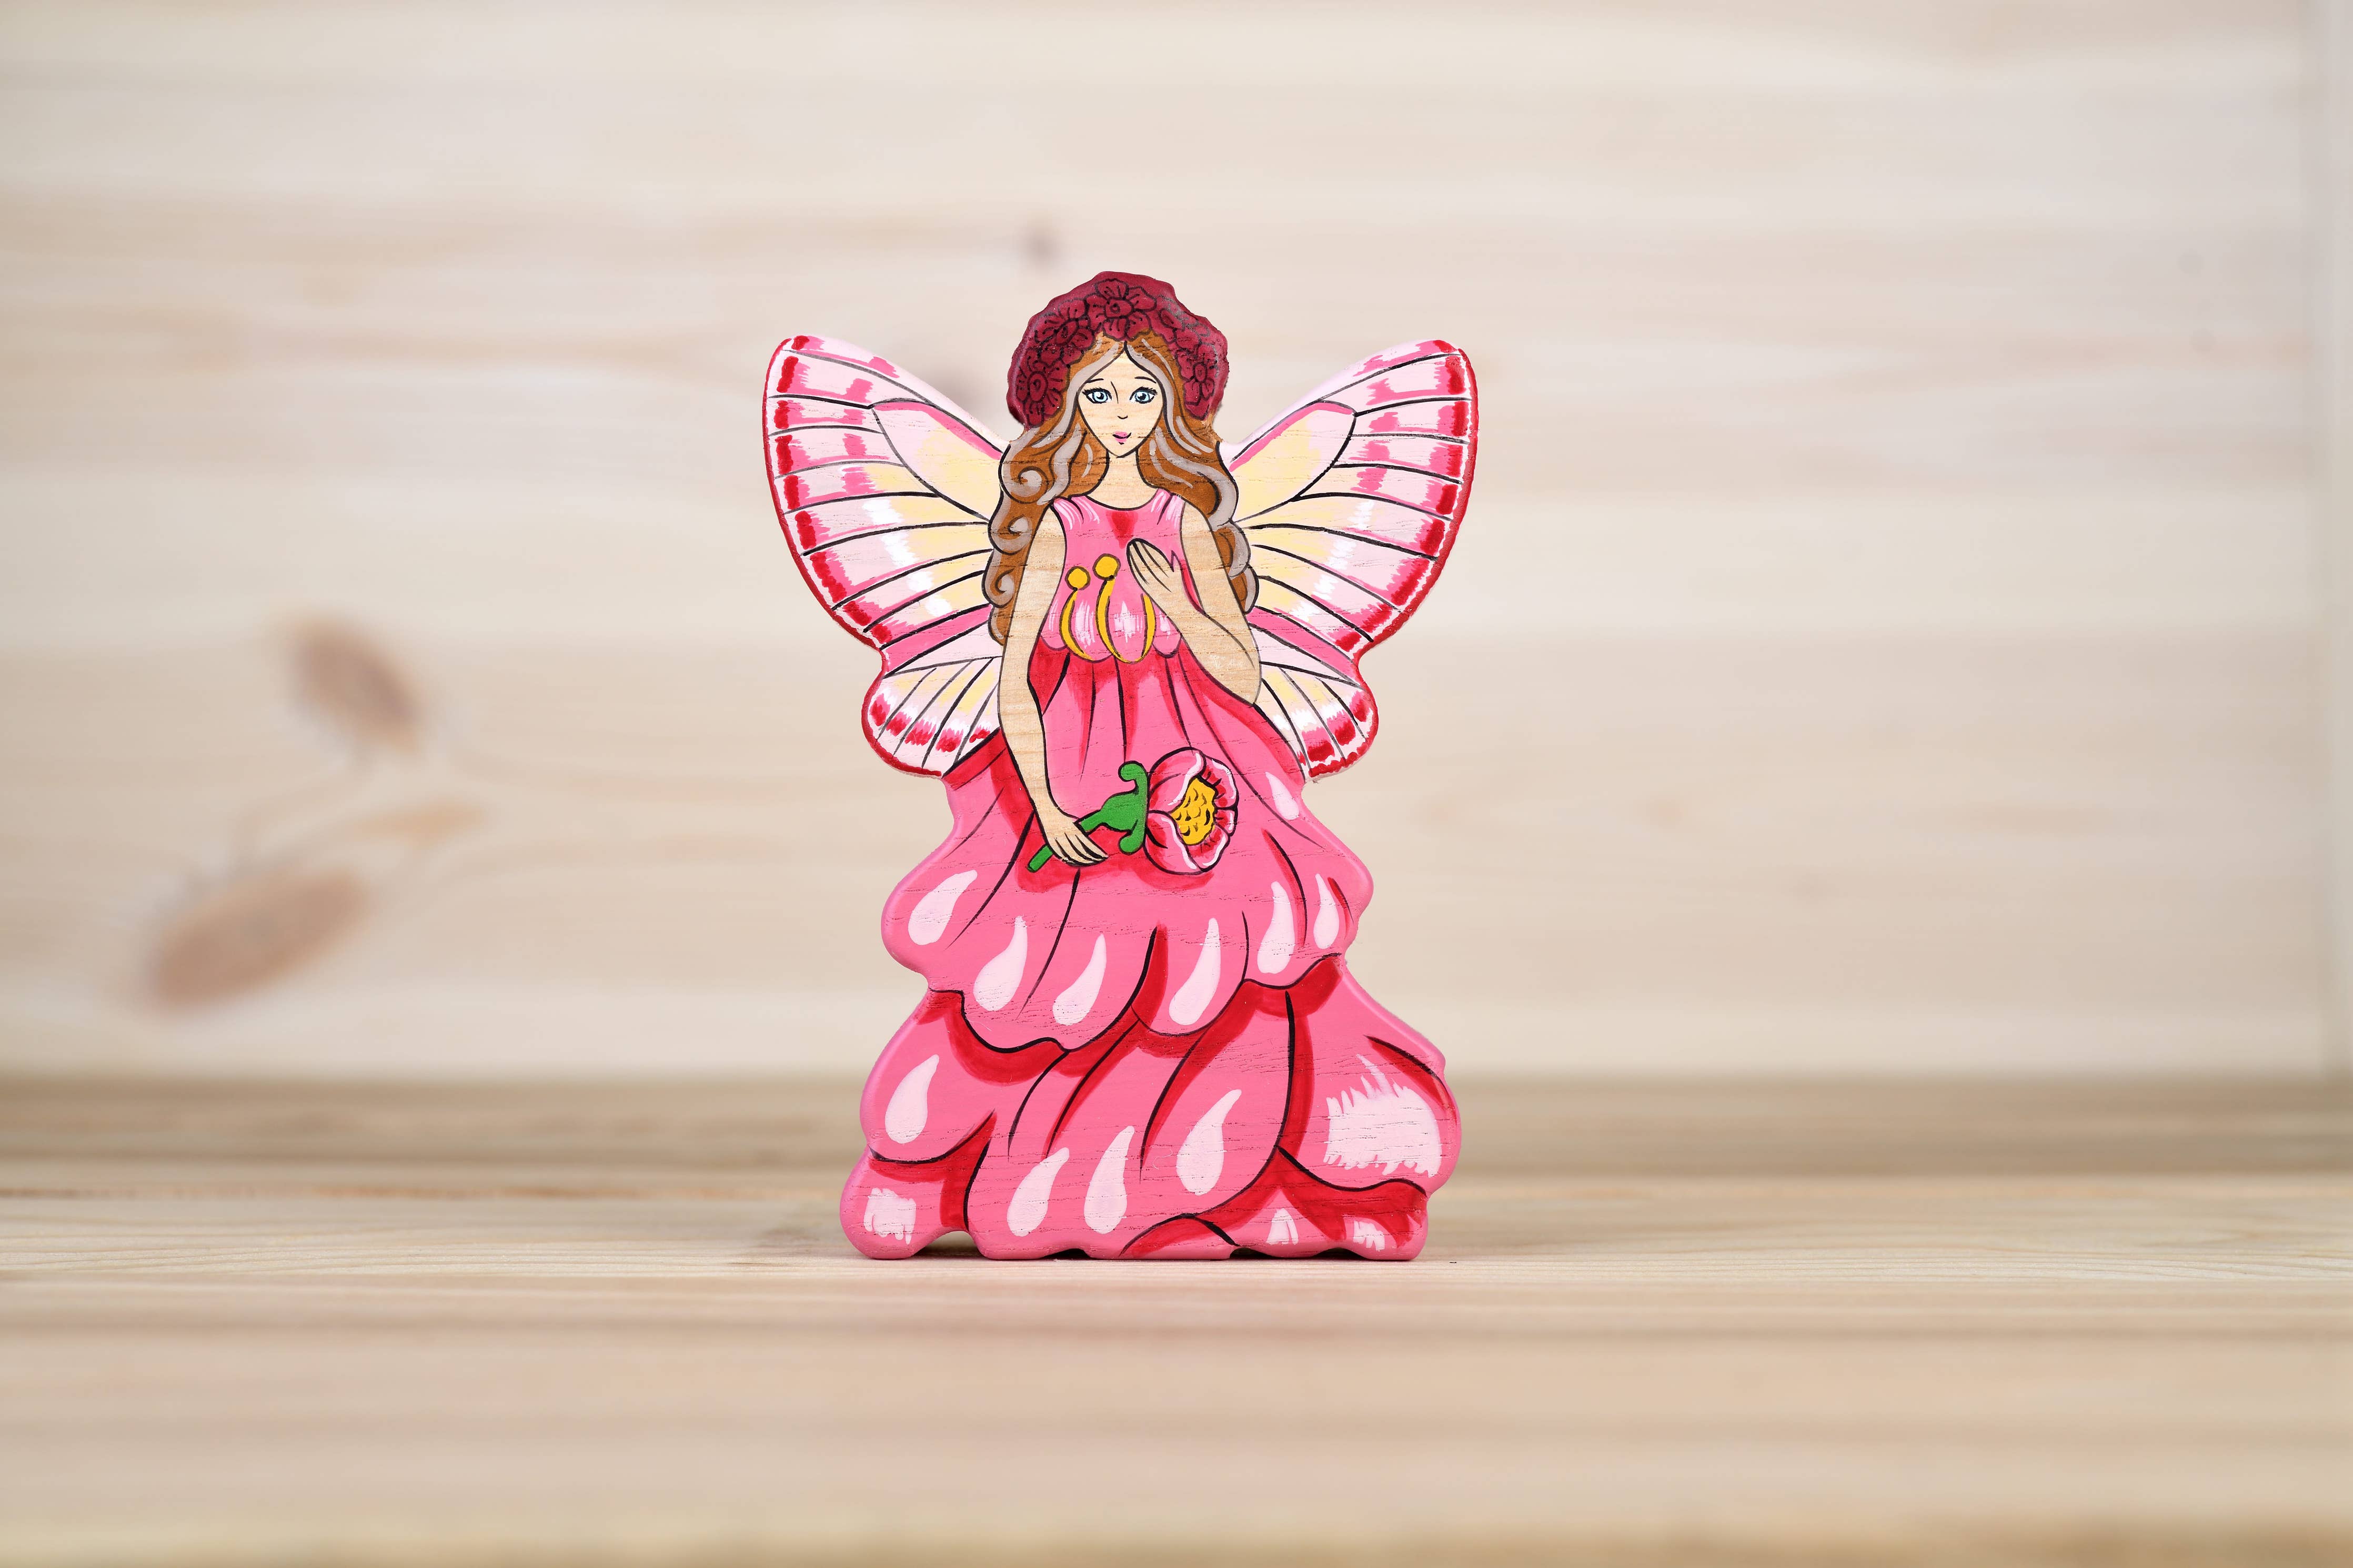 Wooden Big Fairy figurine legendary creature